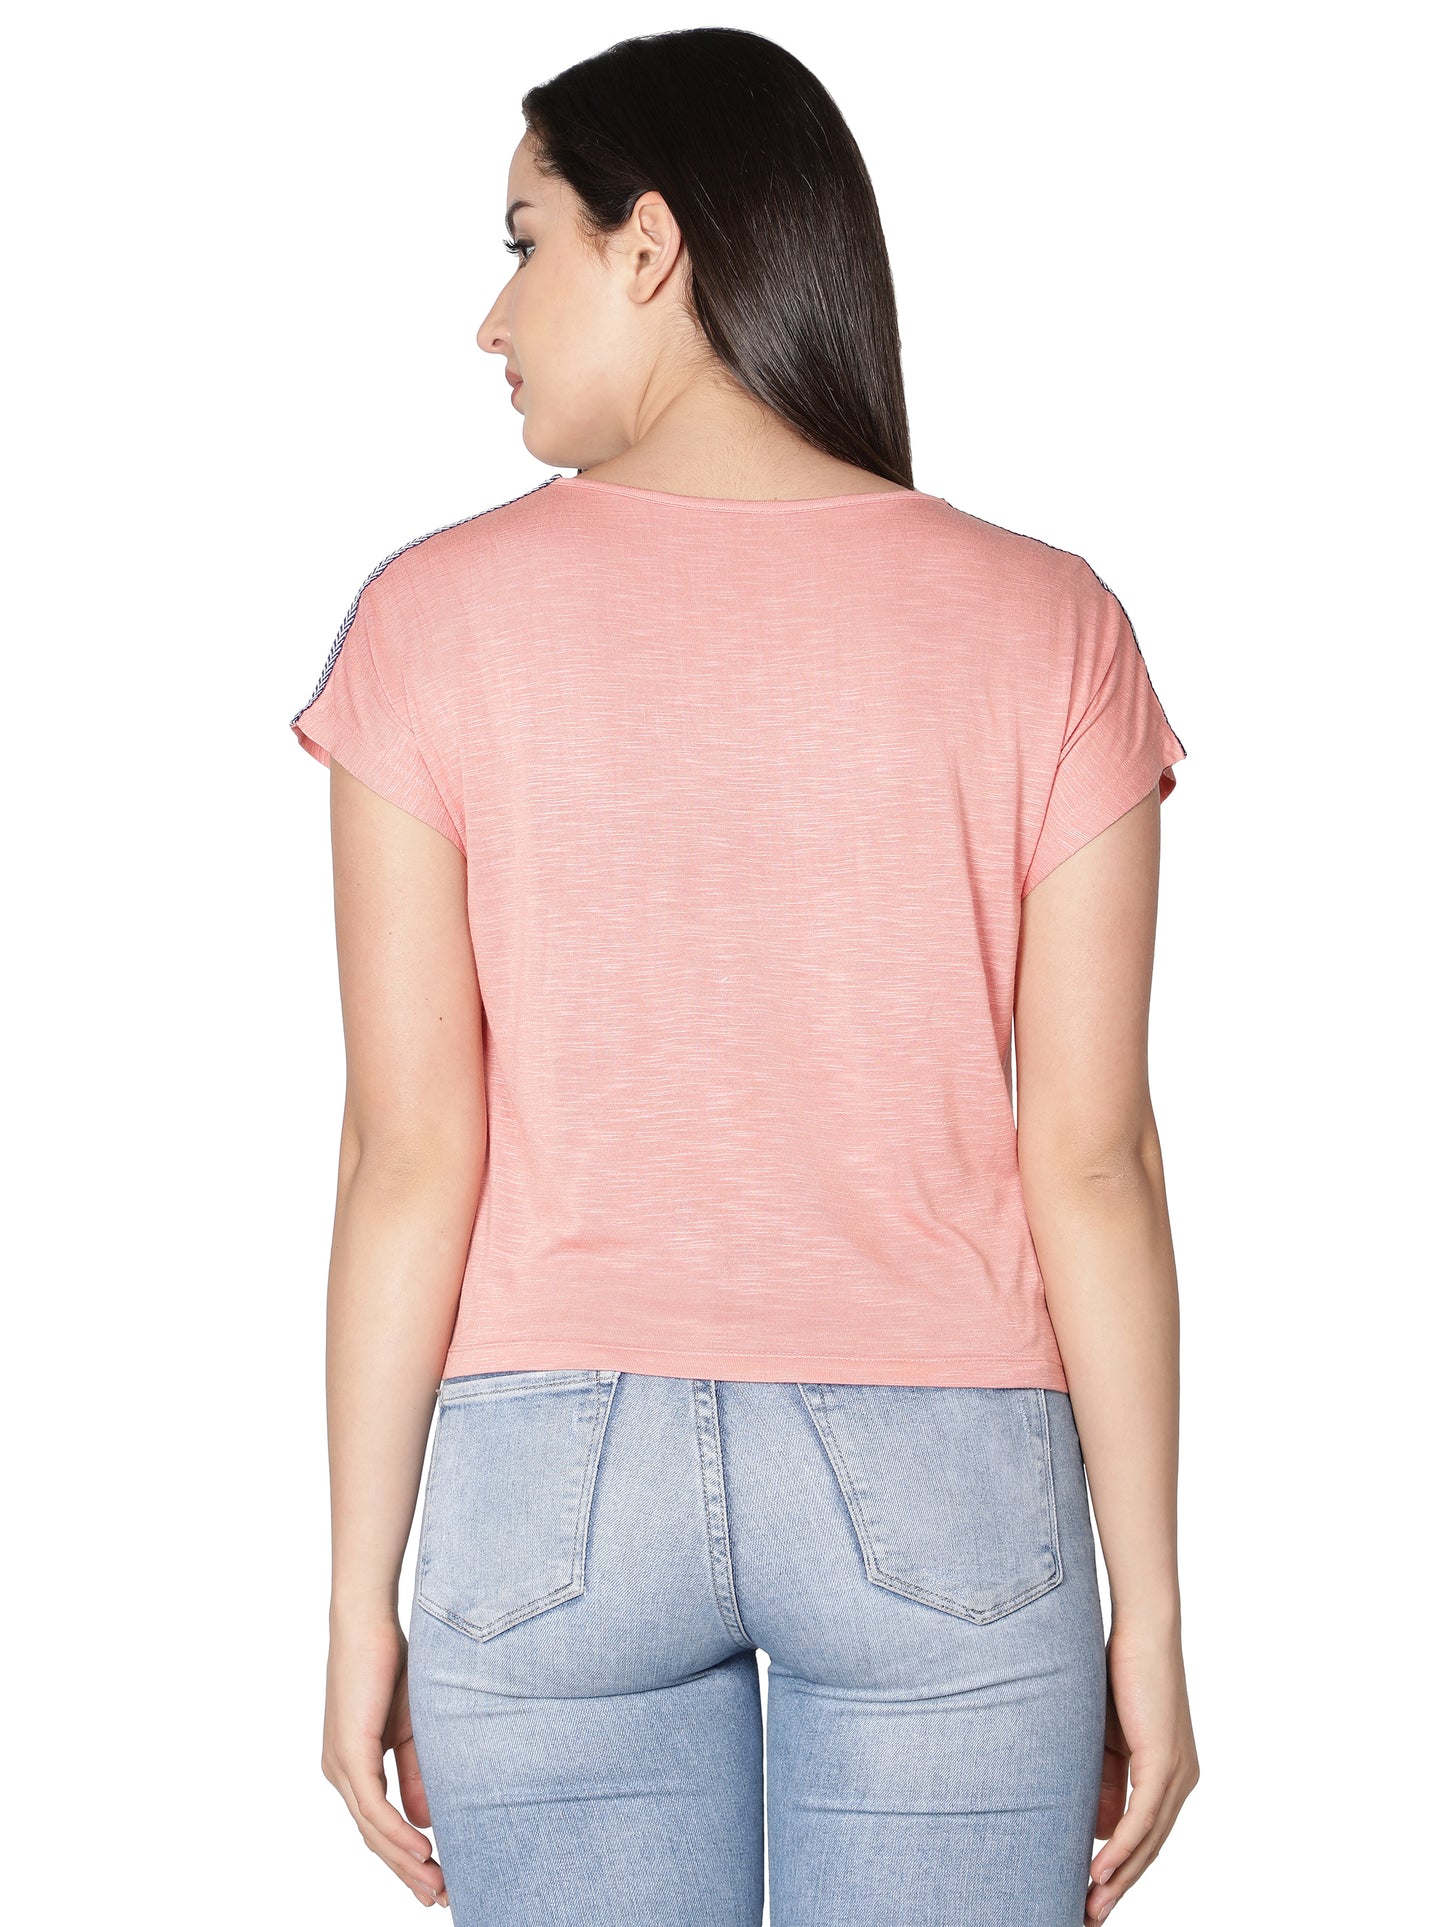 NUEVOSDAMAS Women Rayon Printed Pink T-Shirt